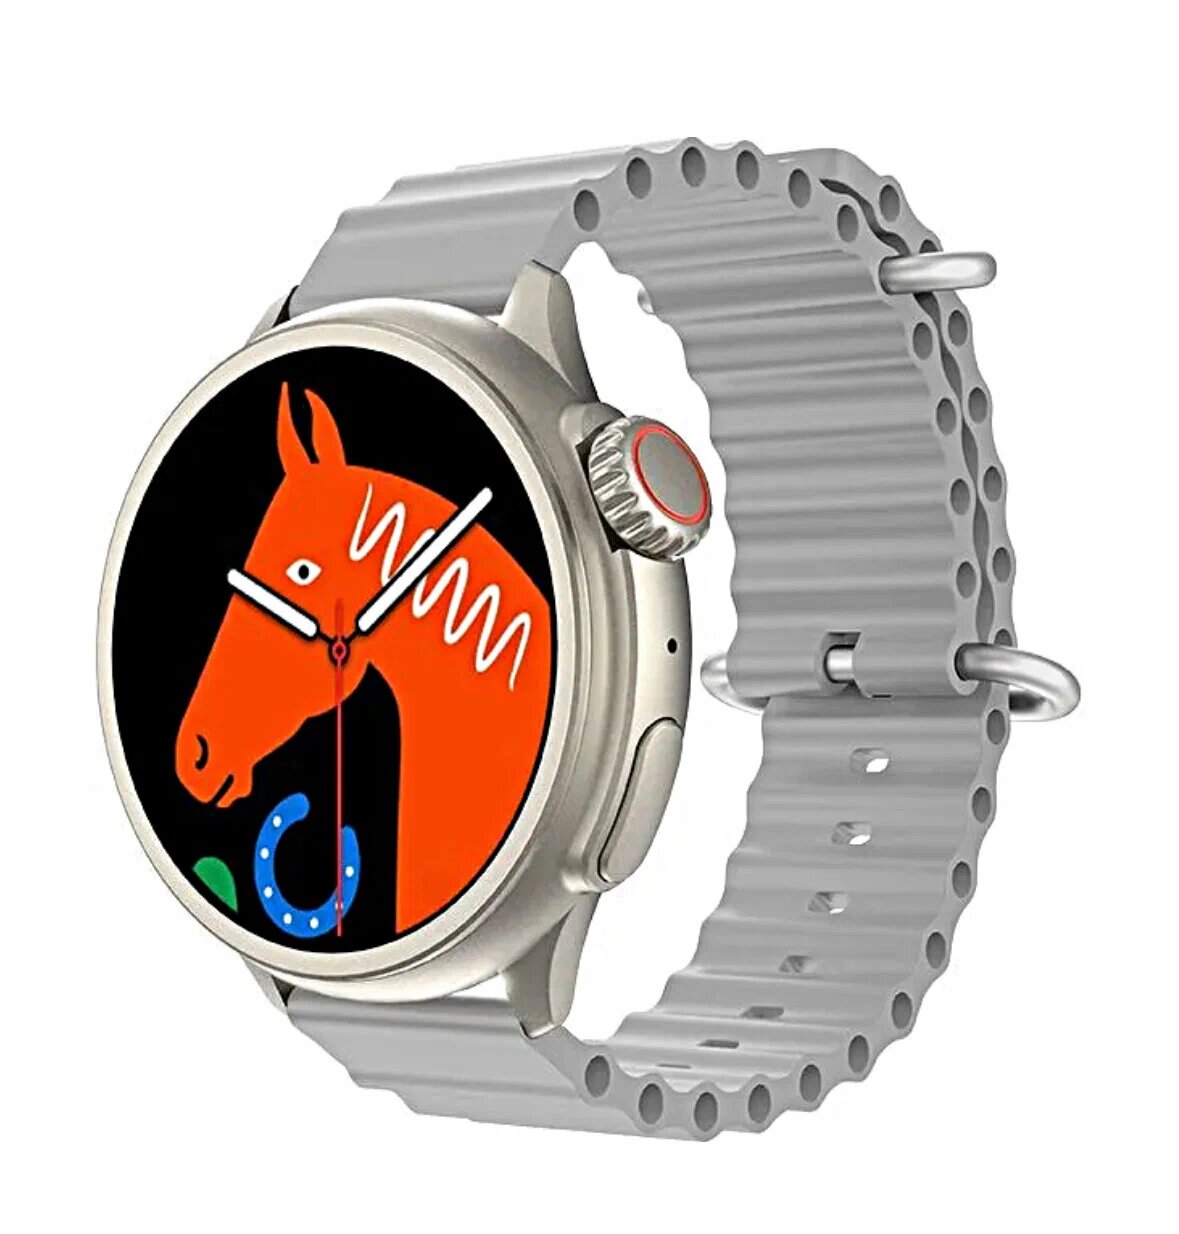 Cмарт часы HW 3 ULTRA MAX Умные часы PREMIUM Series Smart Watch iPS Display iOS Android Bluetooth звонки Уведомления Серебристые Pricemin